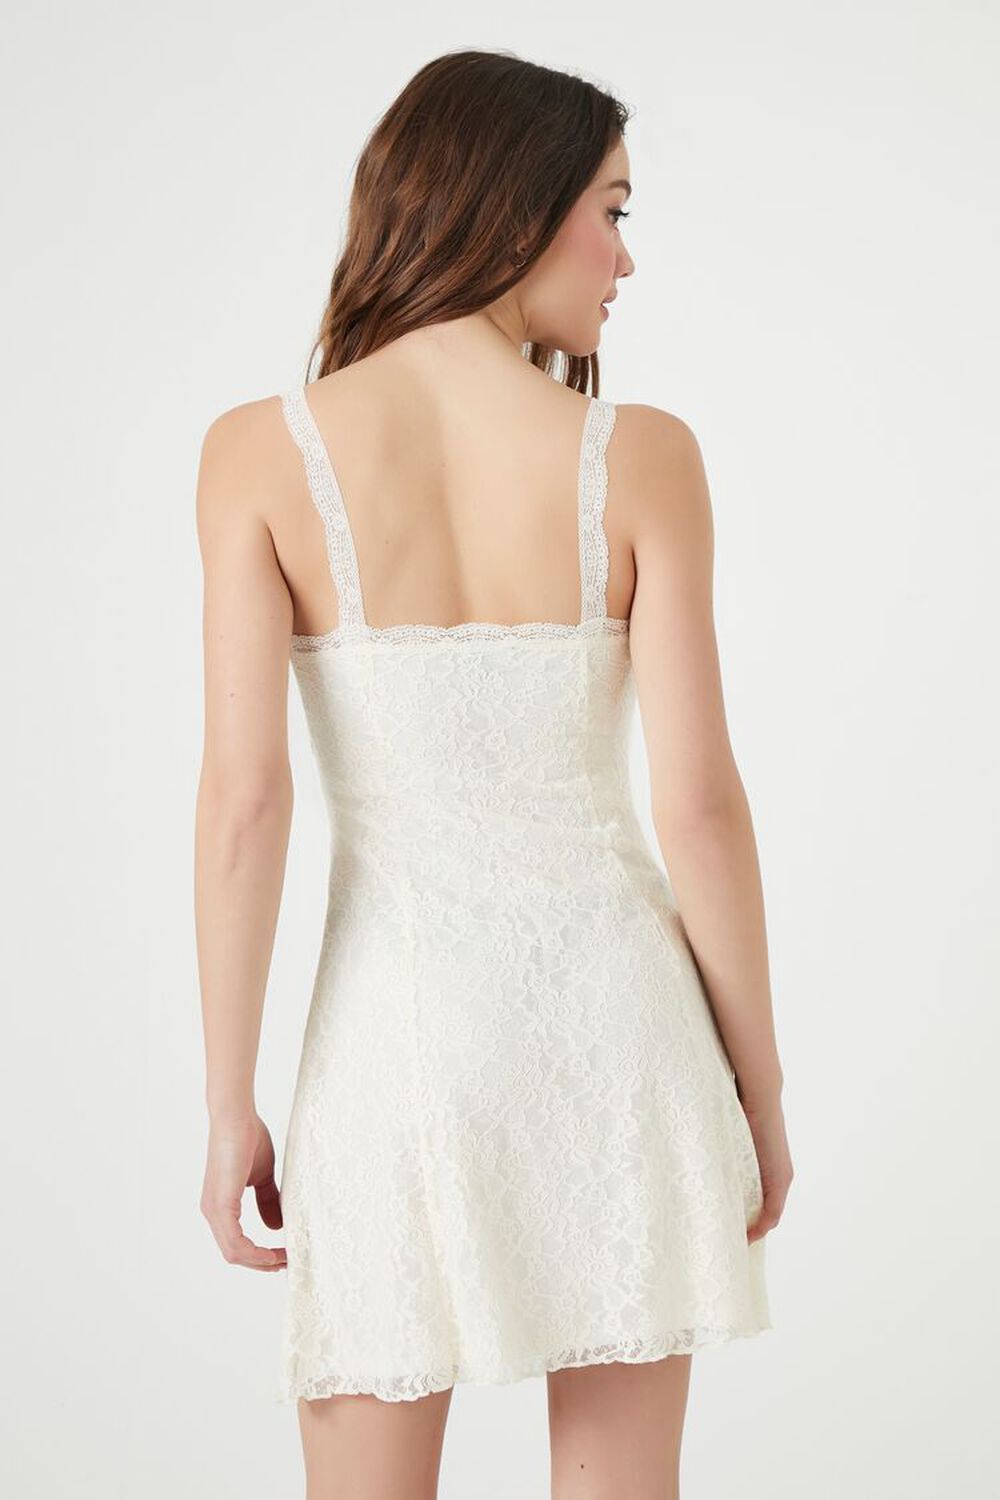 WHITE Lace Cami Mini Dress, image 3